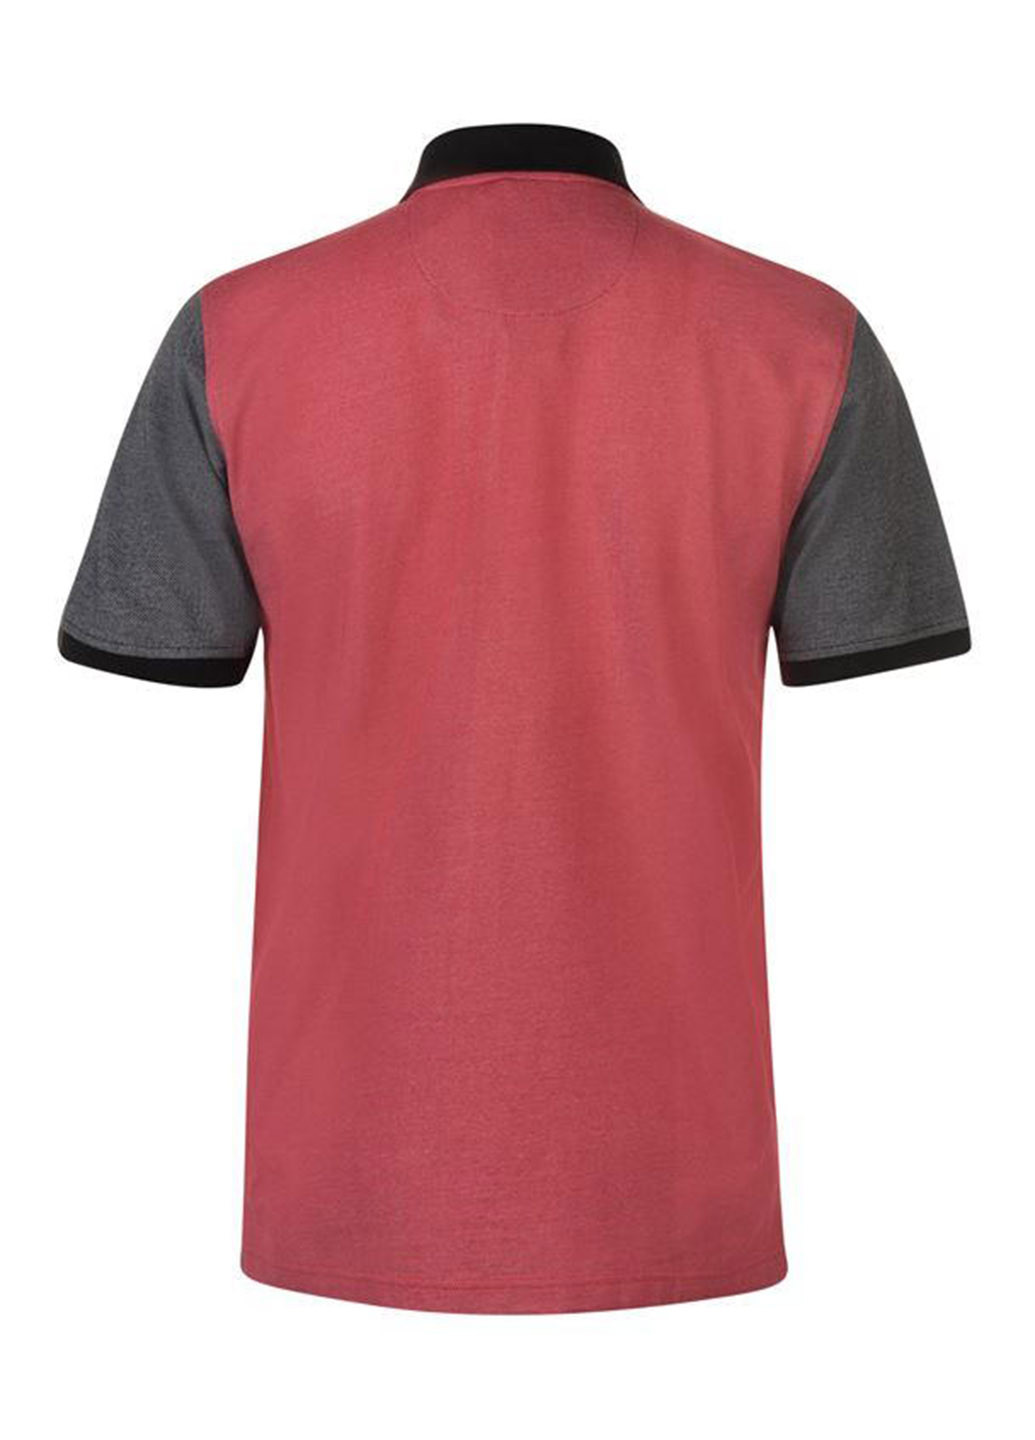 Красная футболка-поло для мужчин Pierre Cardin с логотипом